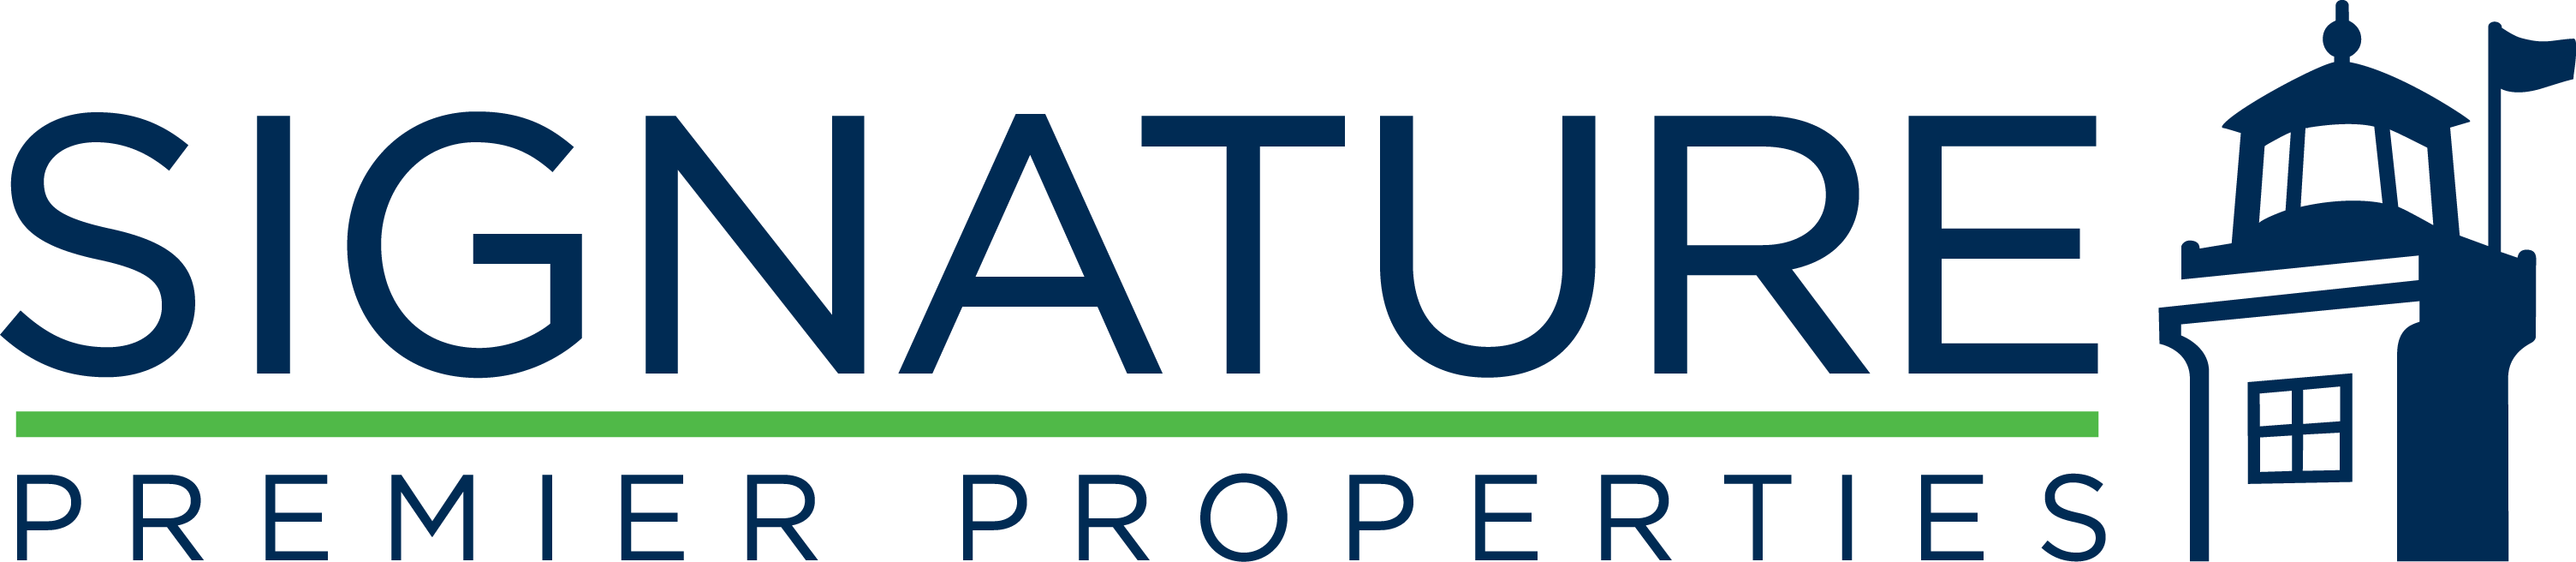 Signature Premier Properties Company Logo